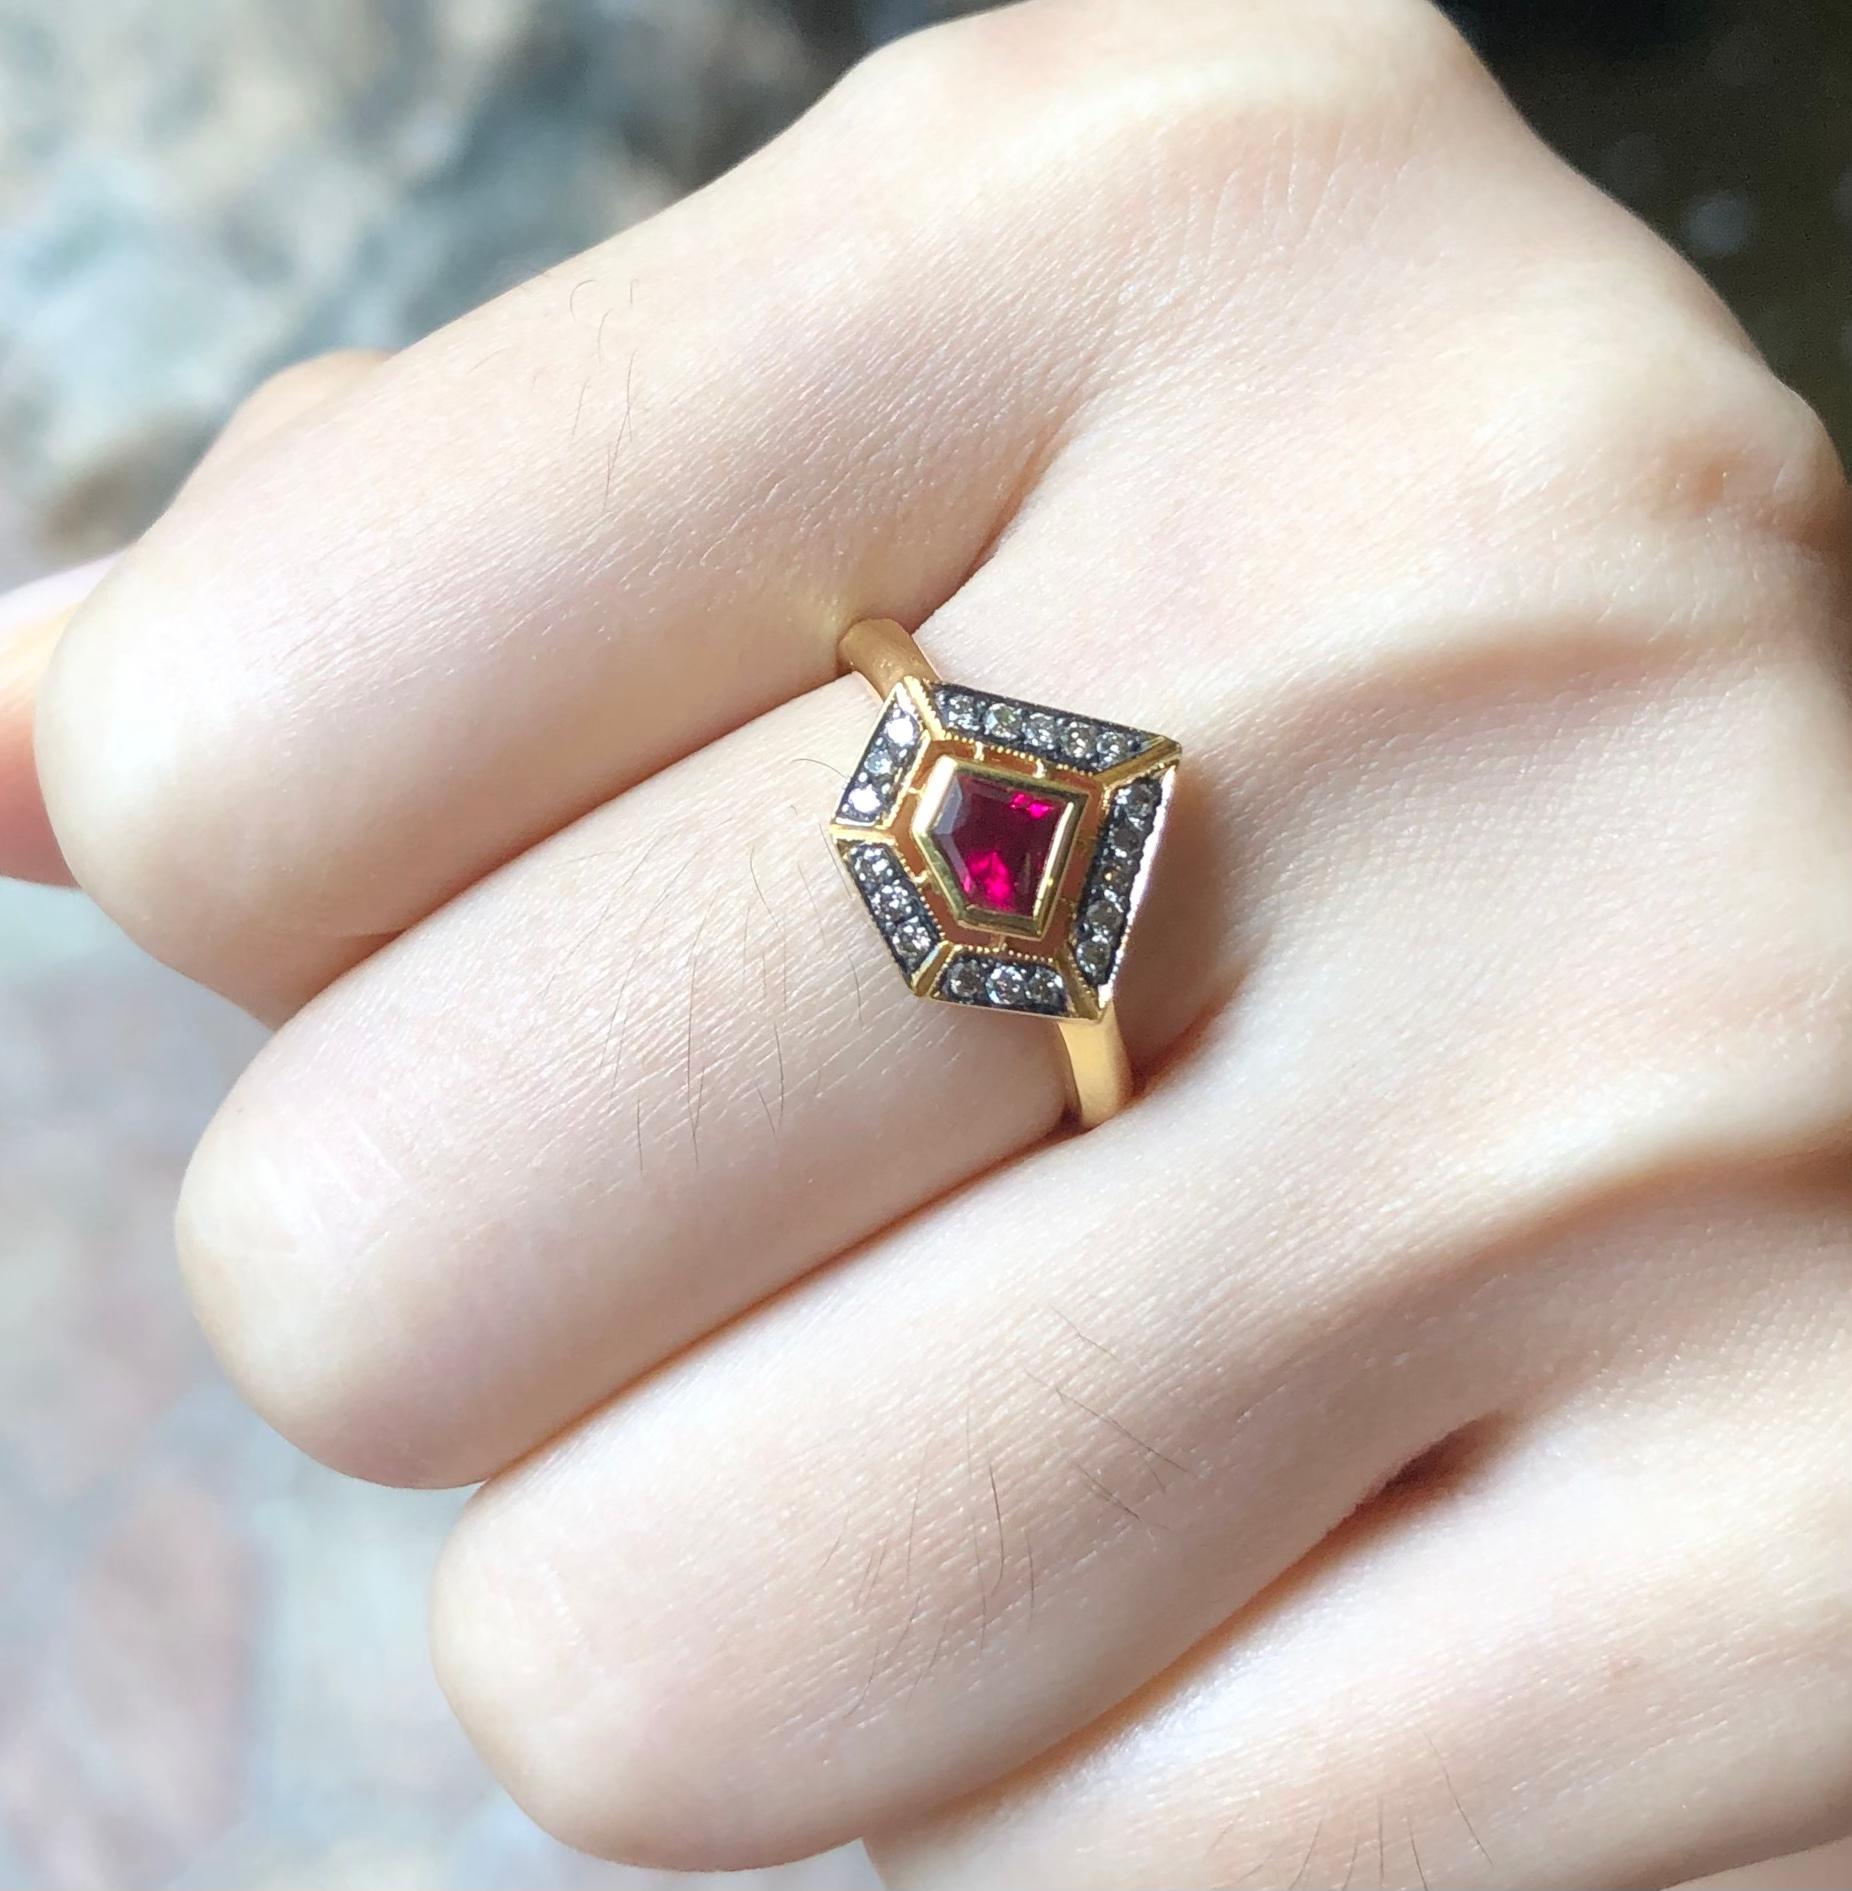 Ruby 0.34 carat with Brown Diamond 0.14 carat Ring set in 18 Karat Gold Settings

Width:  1.2 cm 
Length: 1.0 cm
Ring Size: 52
Total Weight: 4.26 grams

